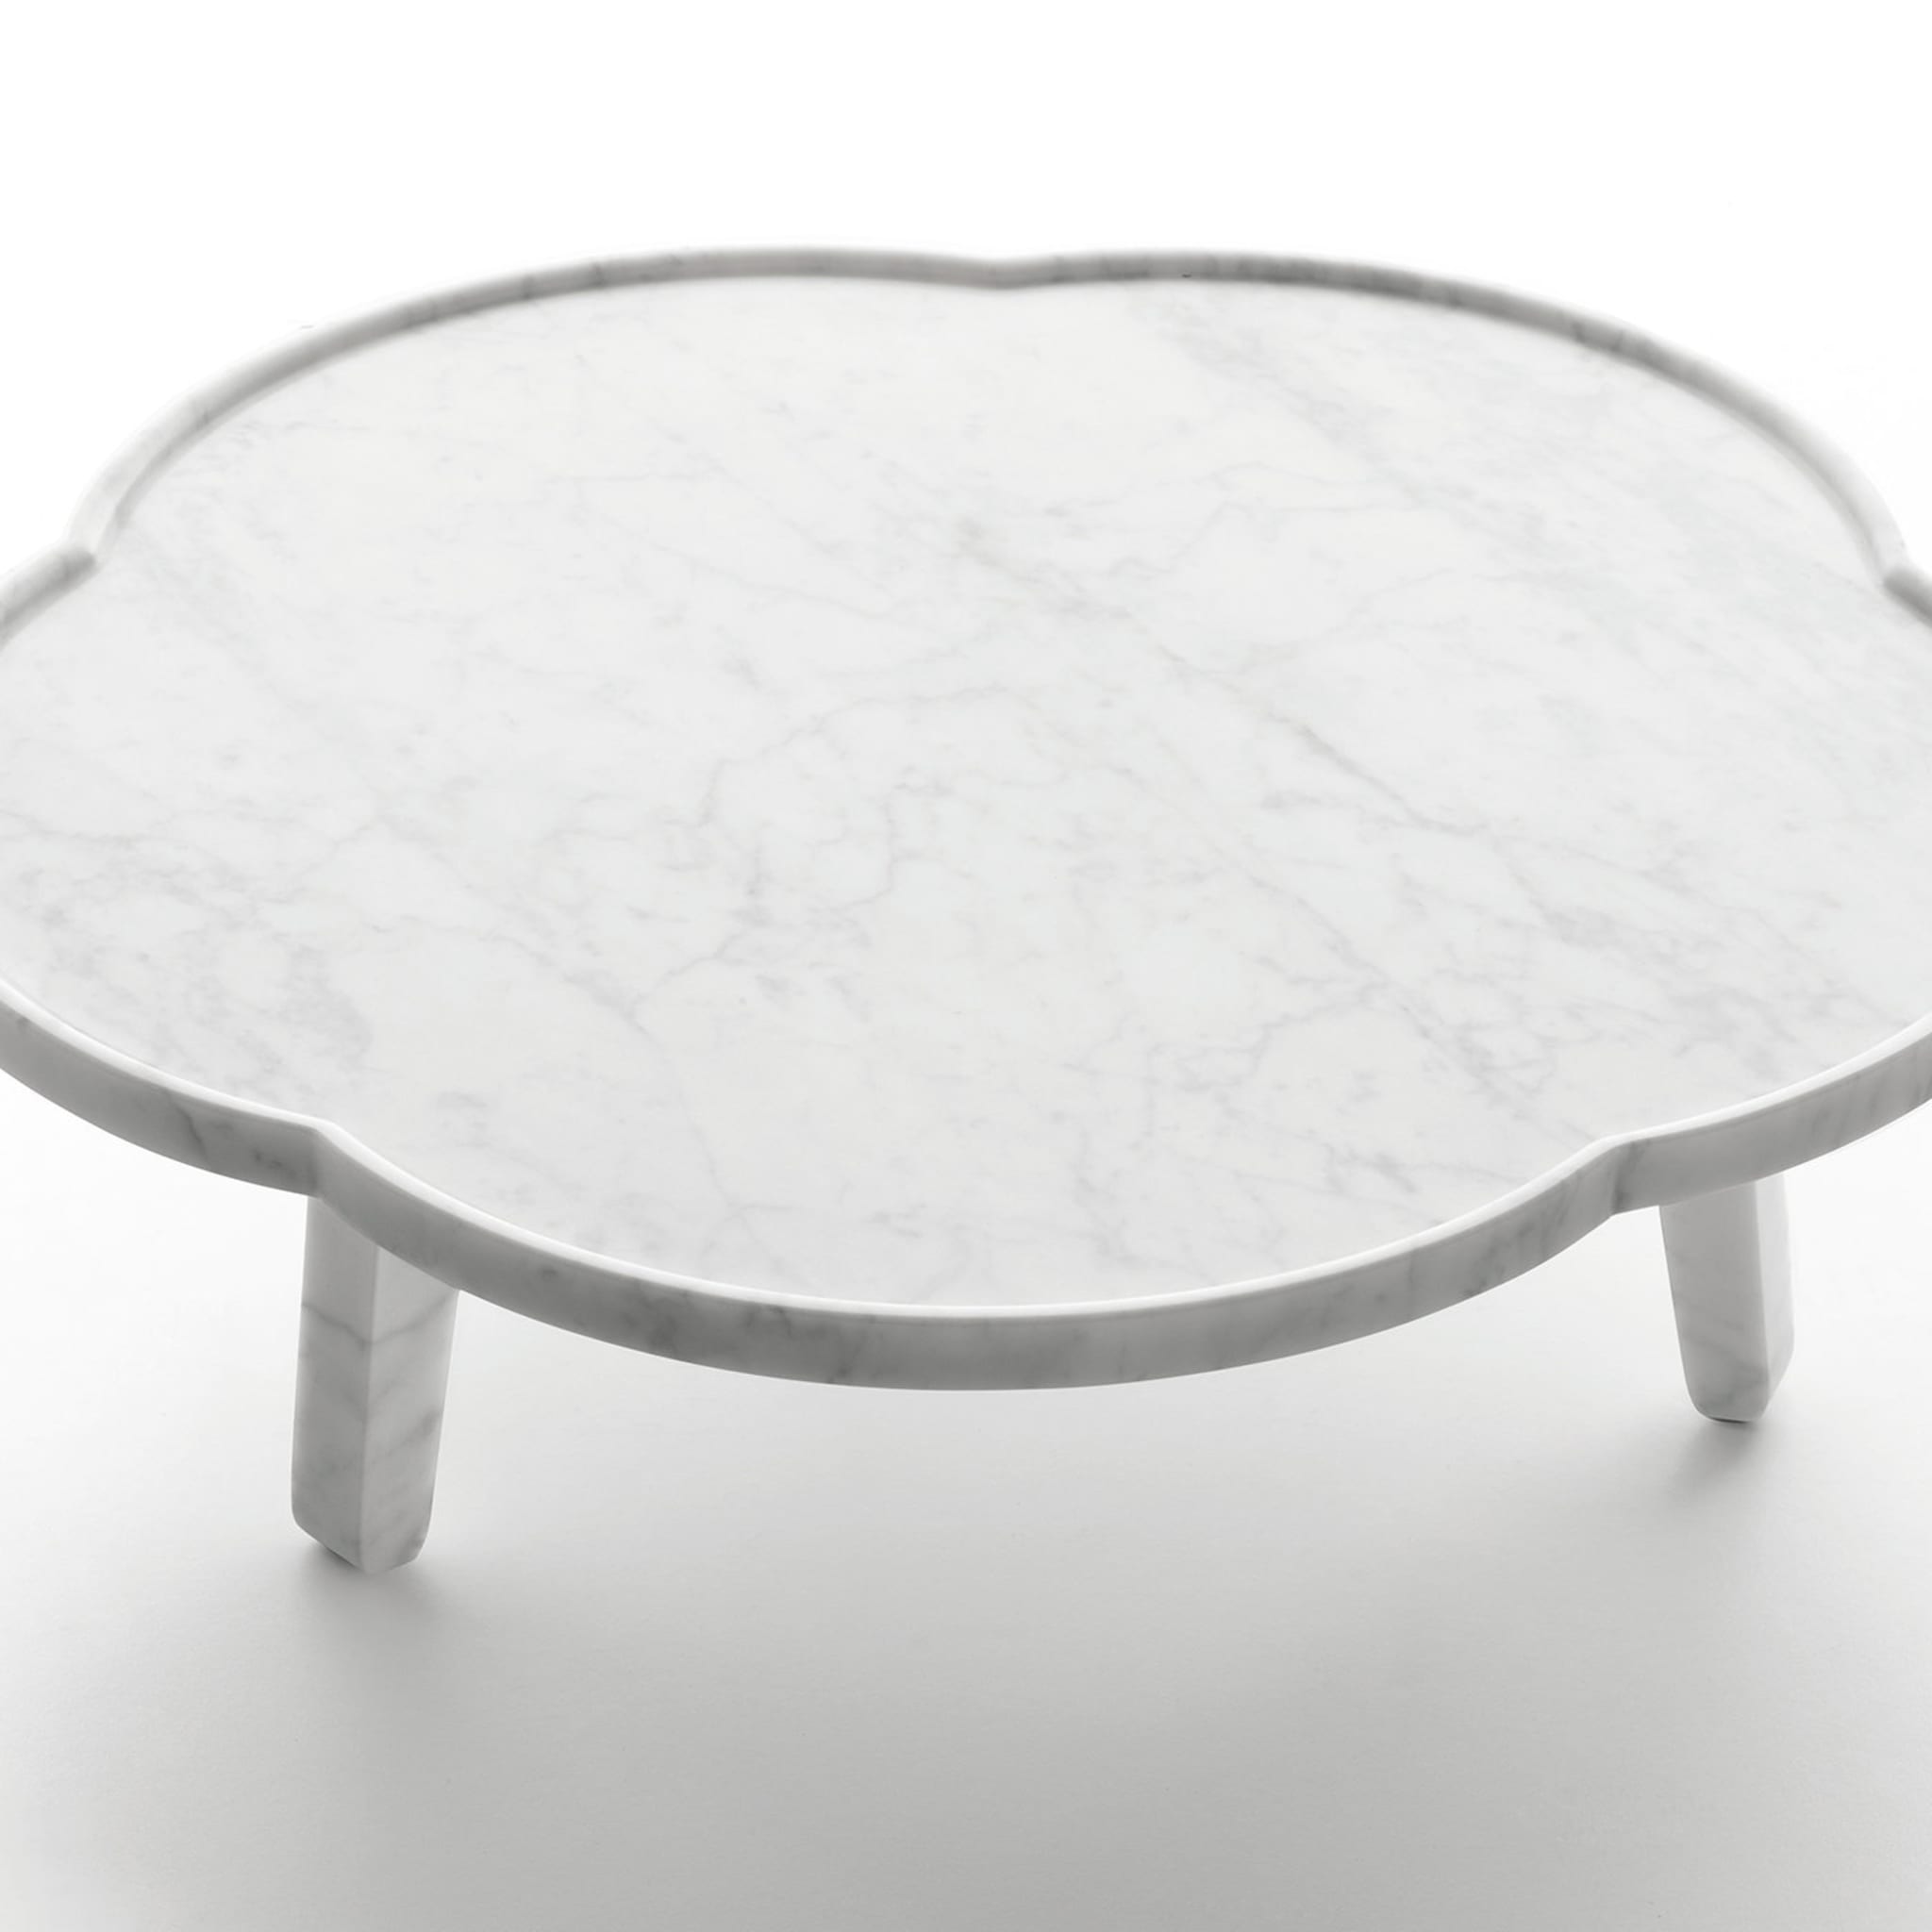 White SOYA TRAY TABLE - Design Claesson Koivisto Rune 2011 - Alternative view 1